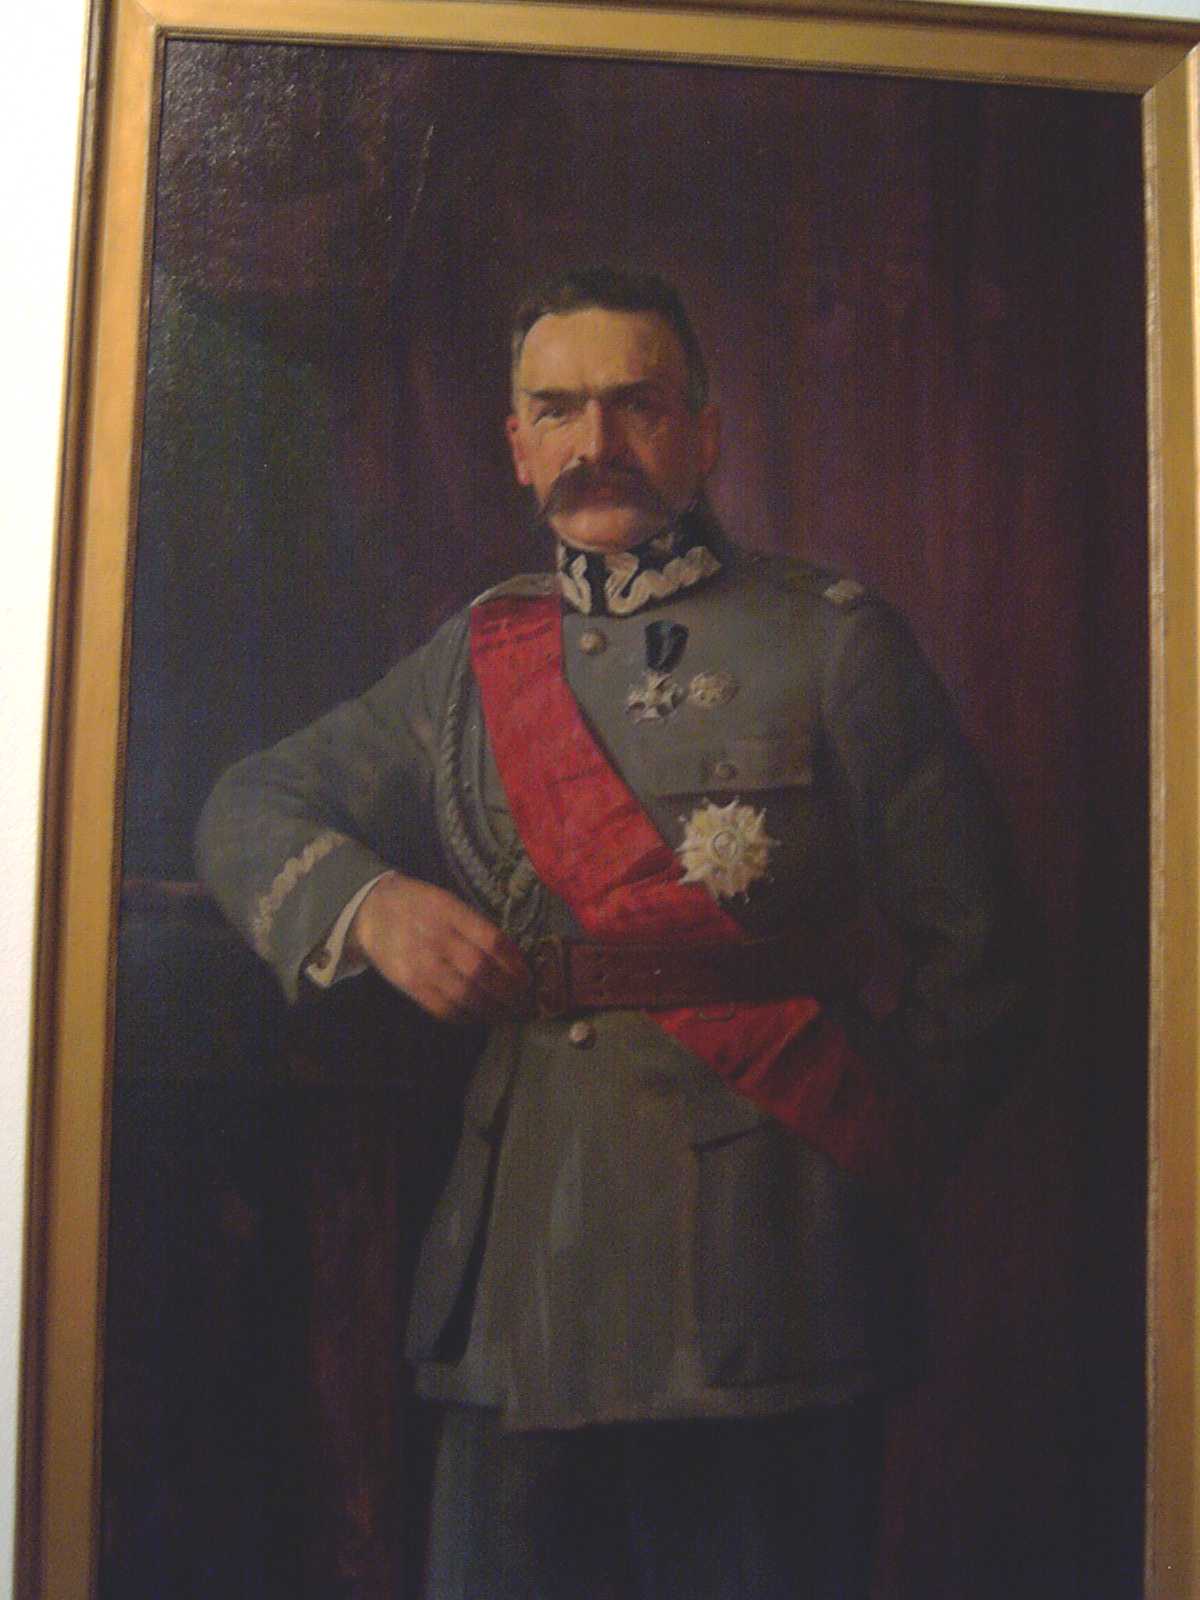 Piłsudski's portrait